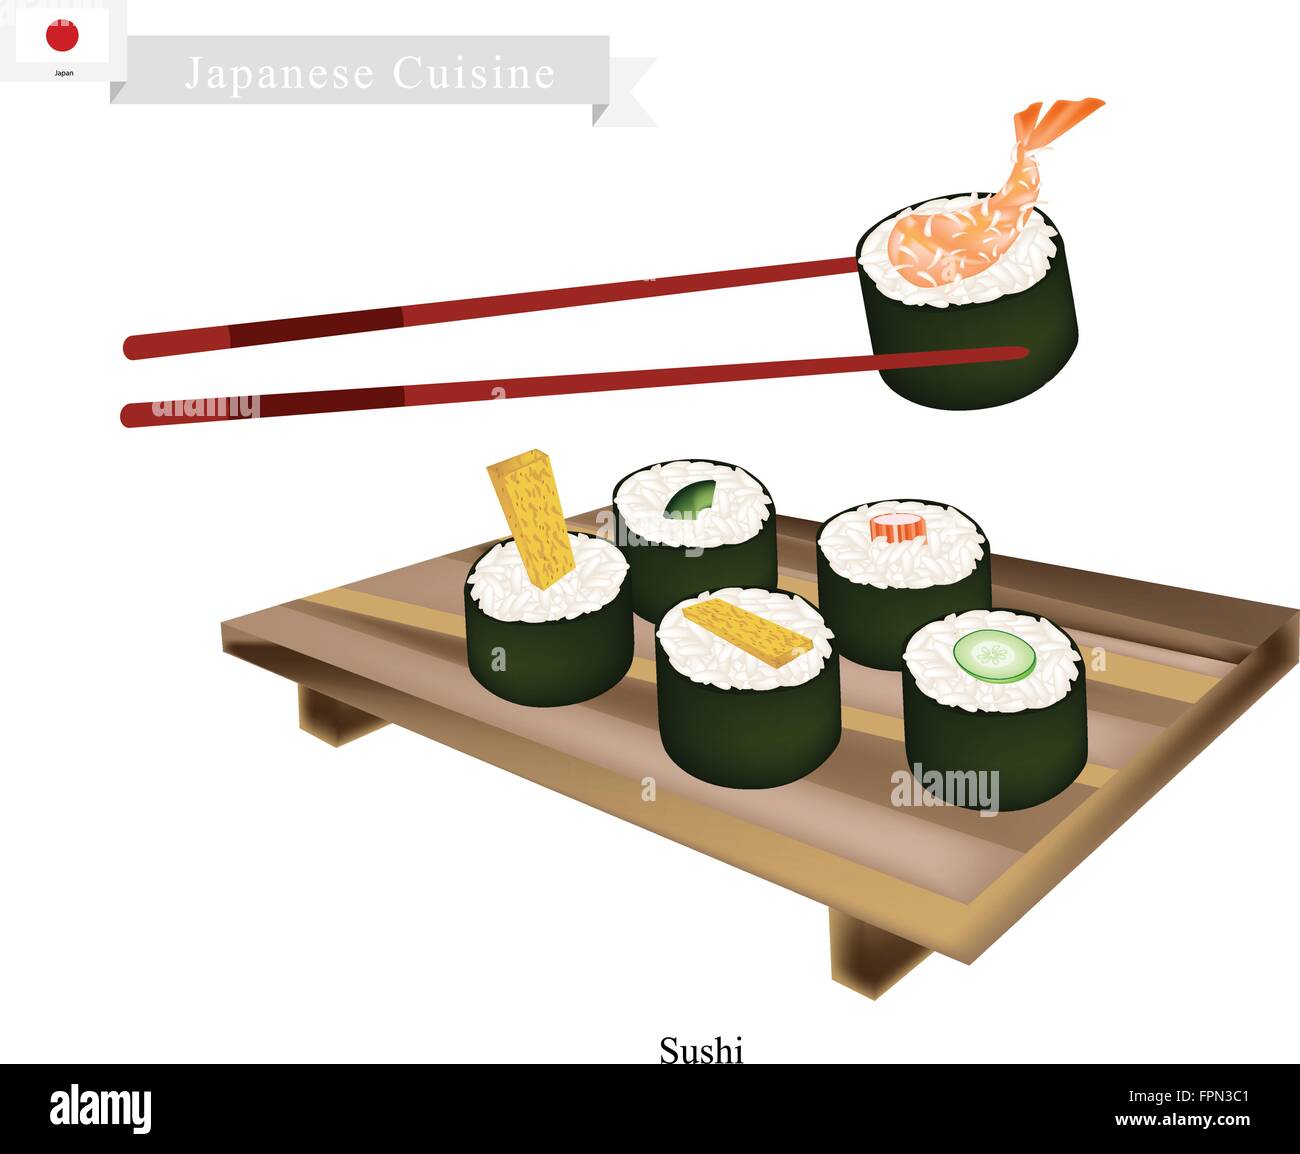 Japanese Cuisine, Illustration of Ebi Tempura, Tamagoyaki, Surimi, Cucumber and Avocado Sushi Roll. One of The Most Popular Dish Stock Vector